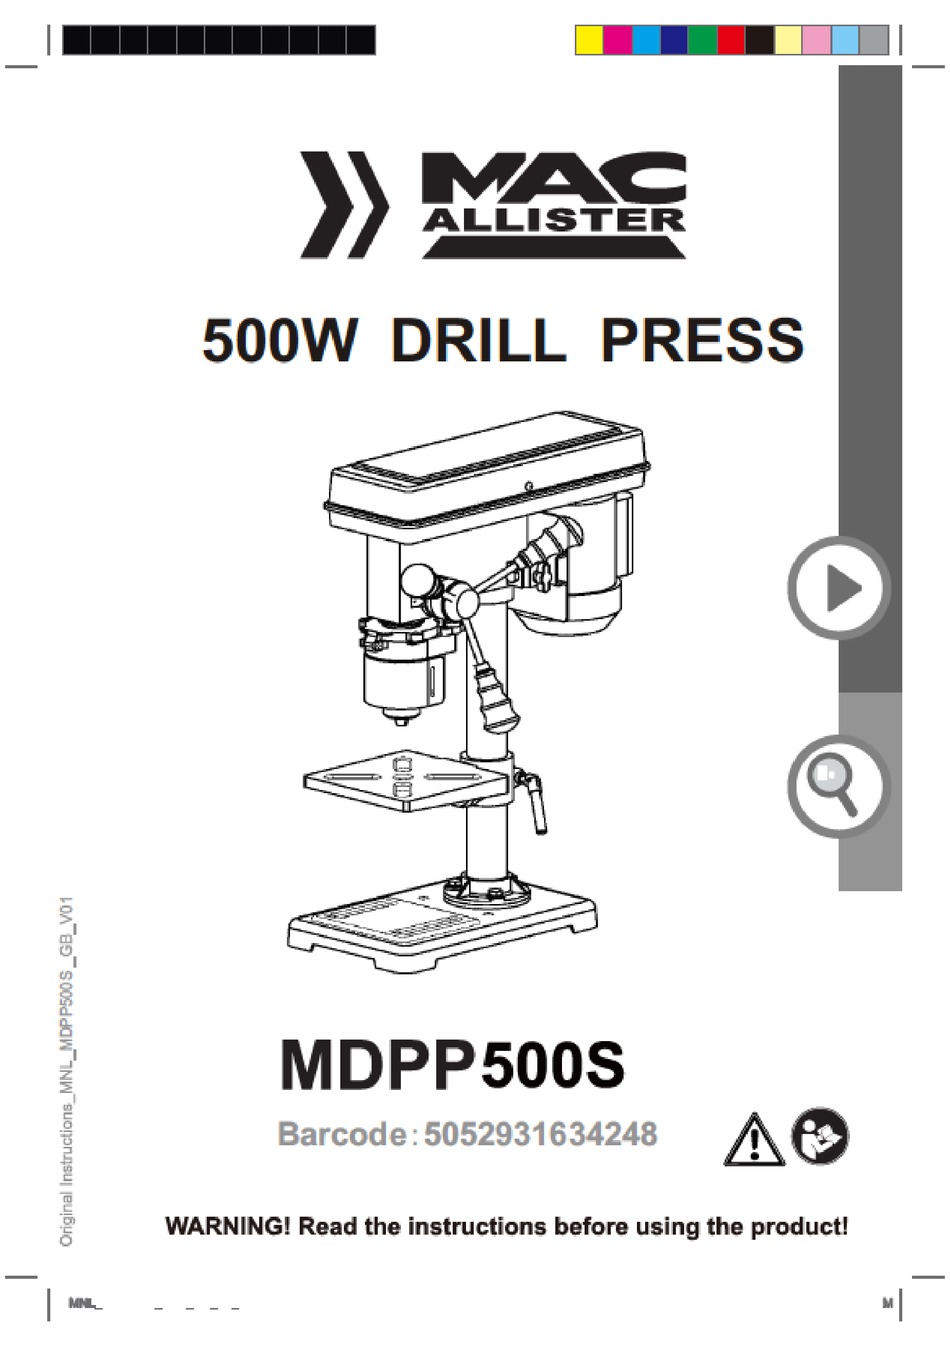 mac allister pressure washer manual